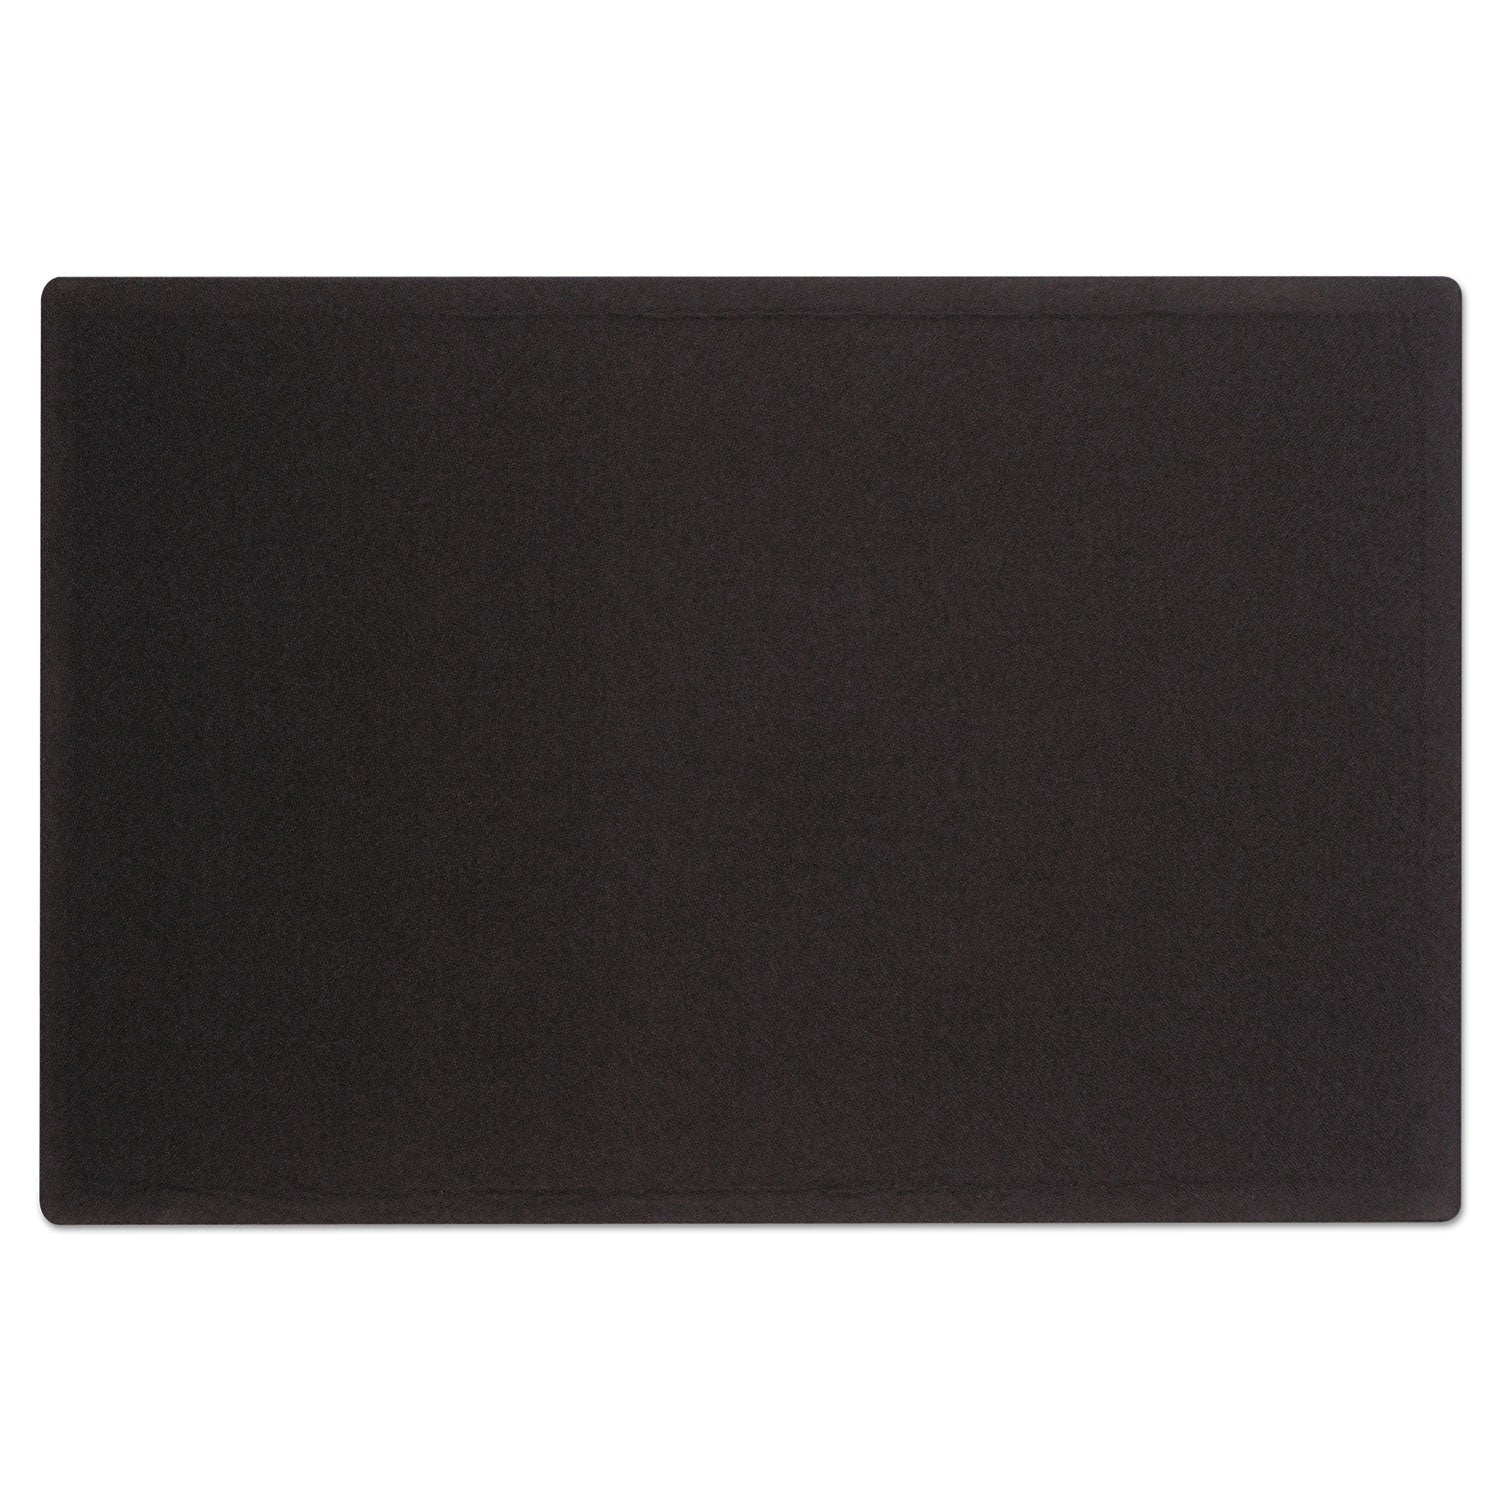 Oval Office Fabric Bulletin Board, 36 x 24, Black Surface - 